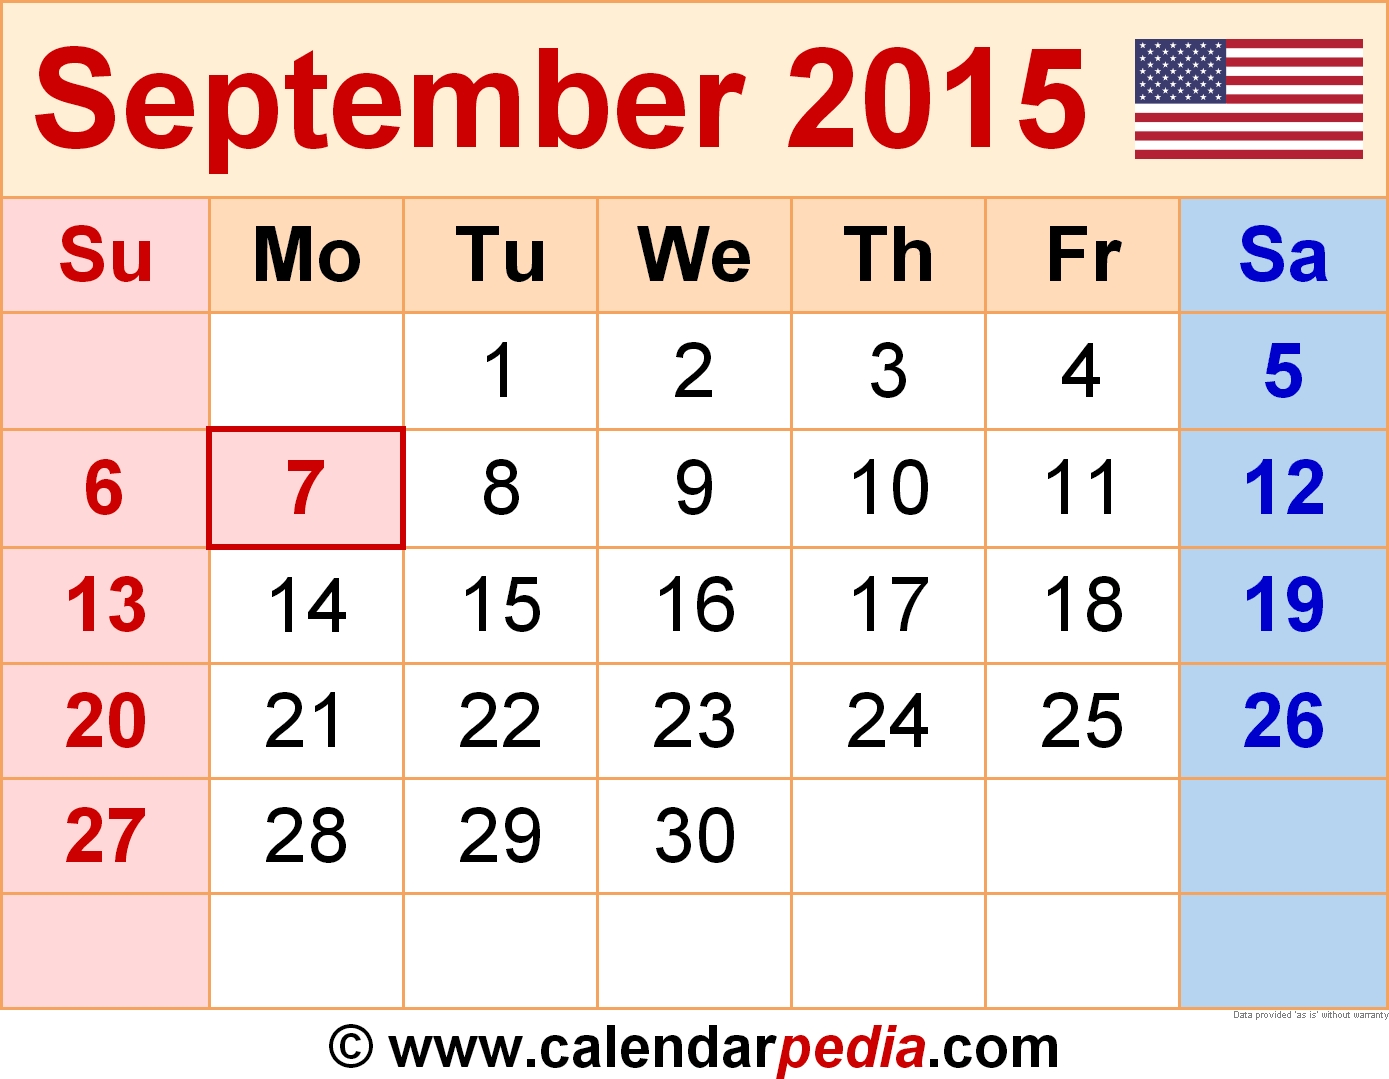 September 2015 Calendars For Word, Excel &amp; Pdf inside Sep Thru December 2015 Calendar Templates